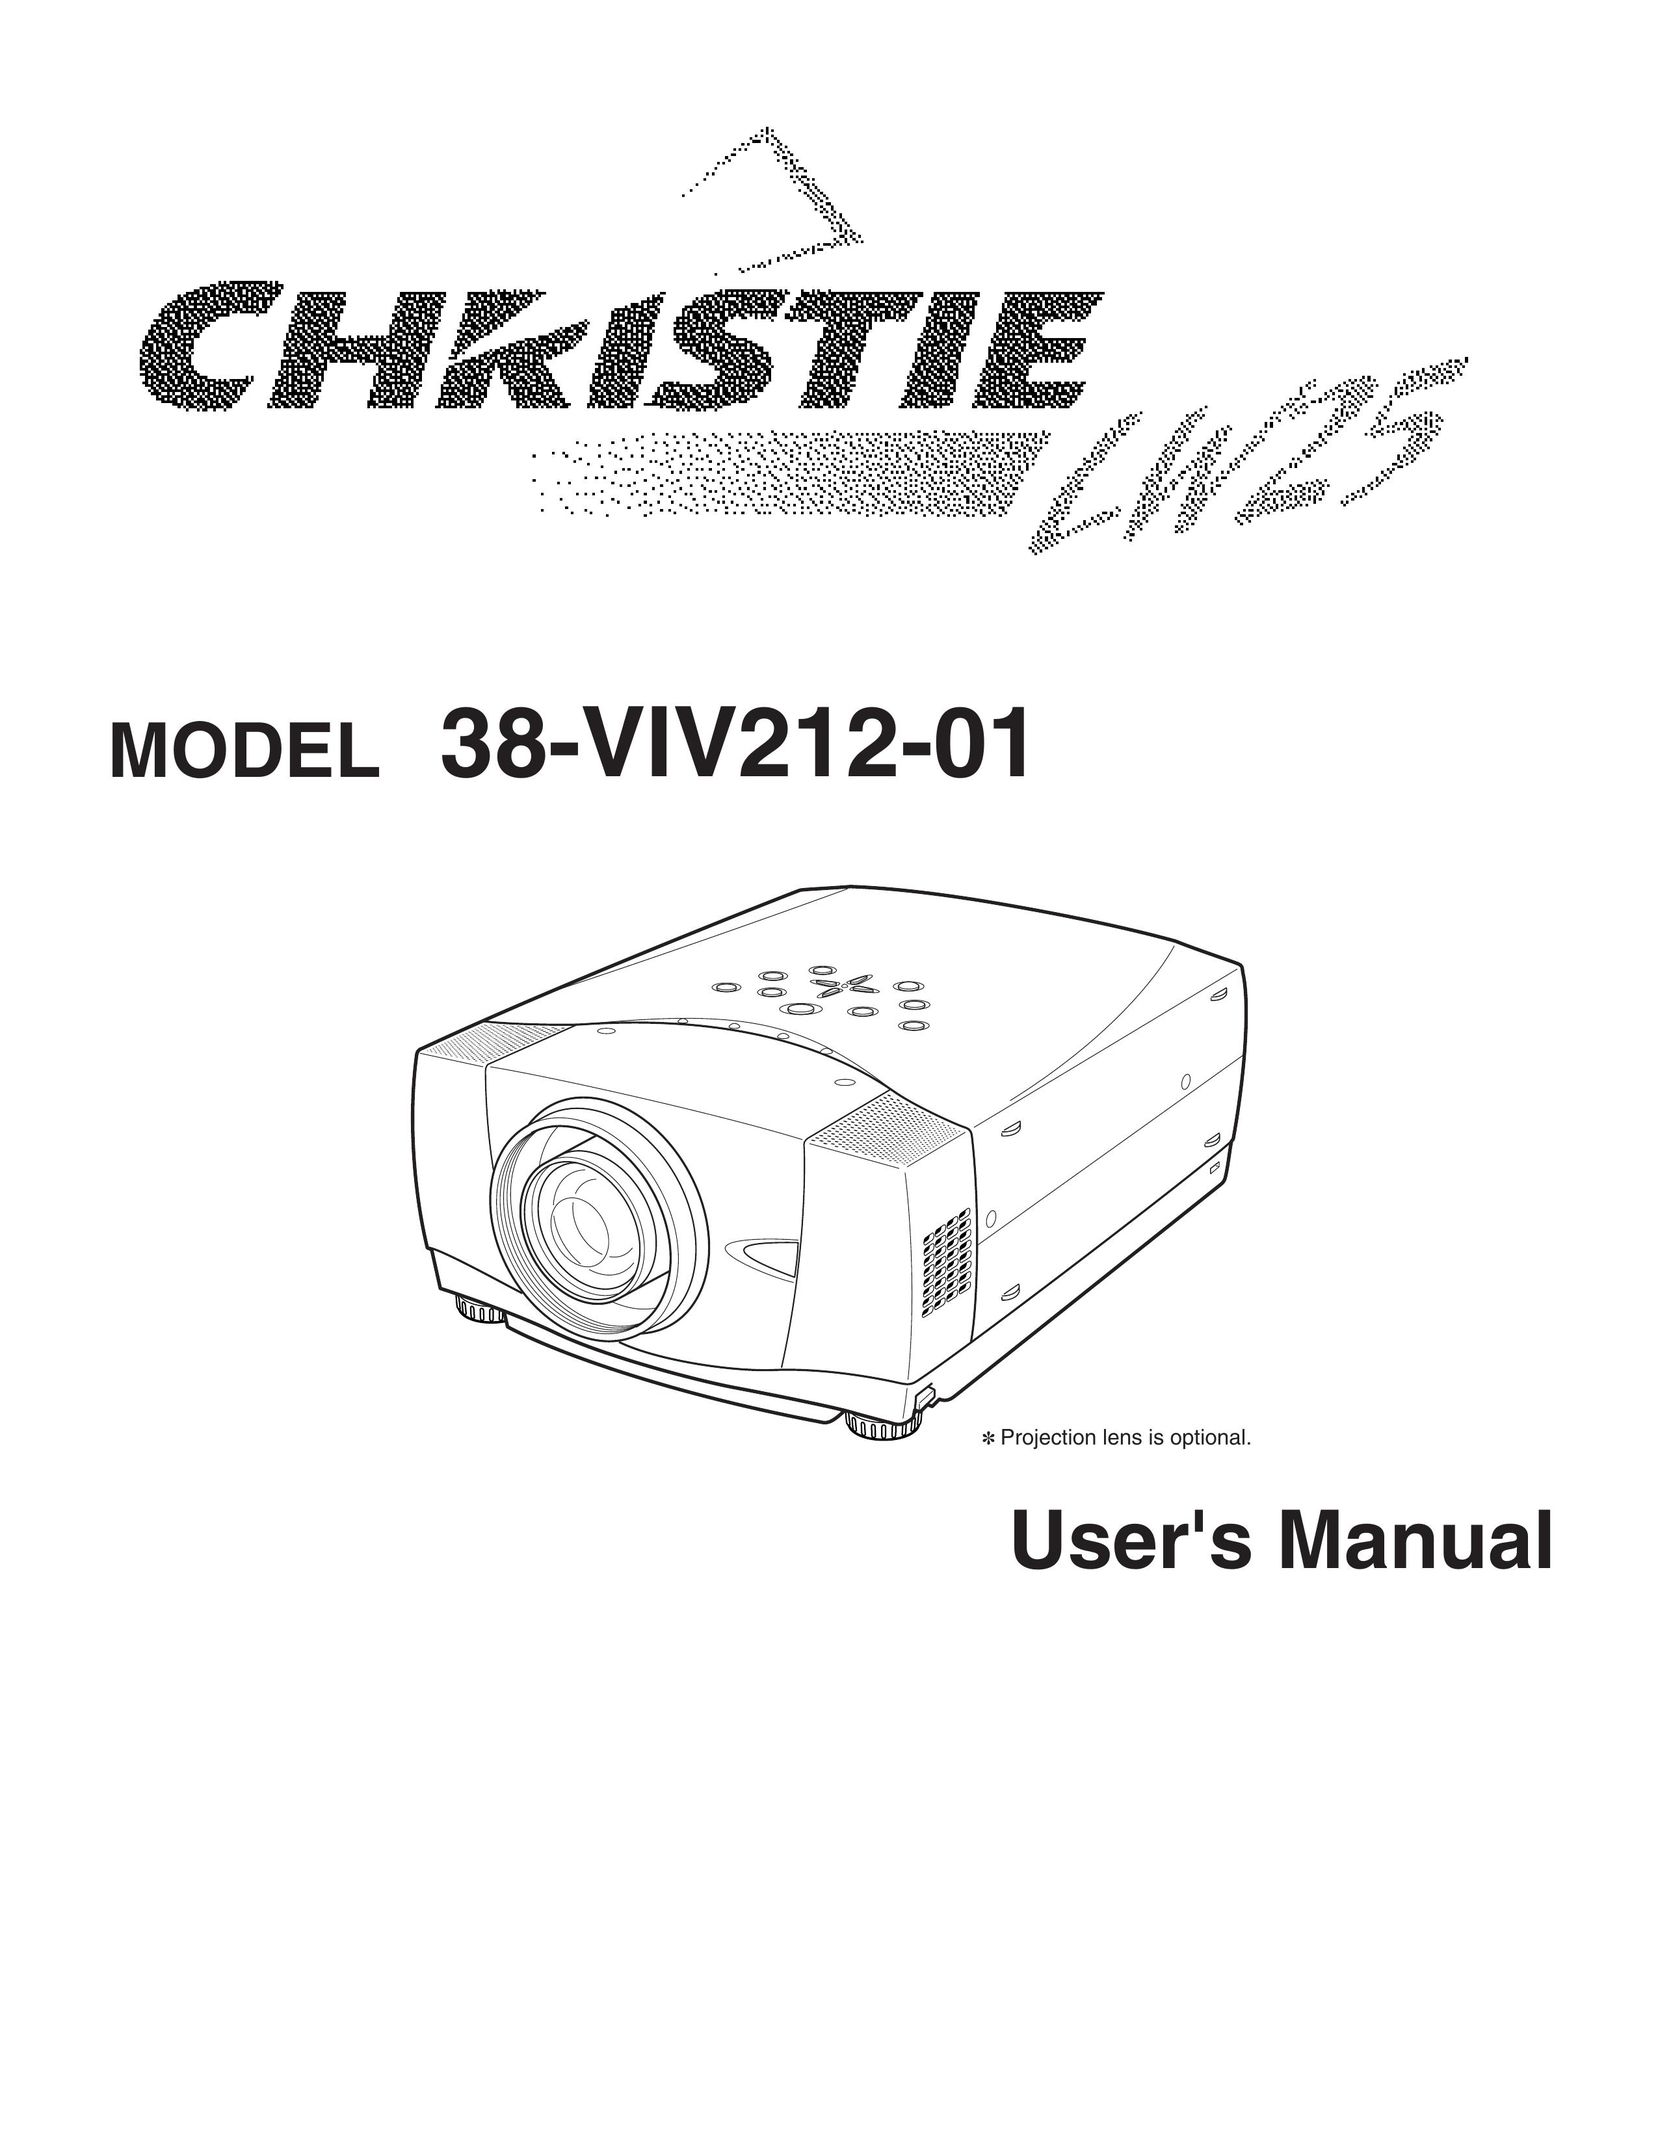 Christie Digital Systems 38-VIV212 Projector User Manual